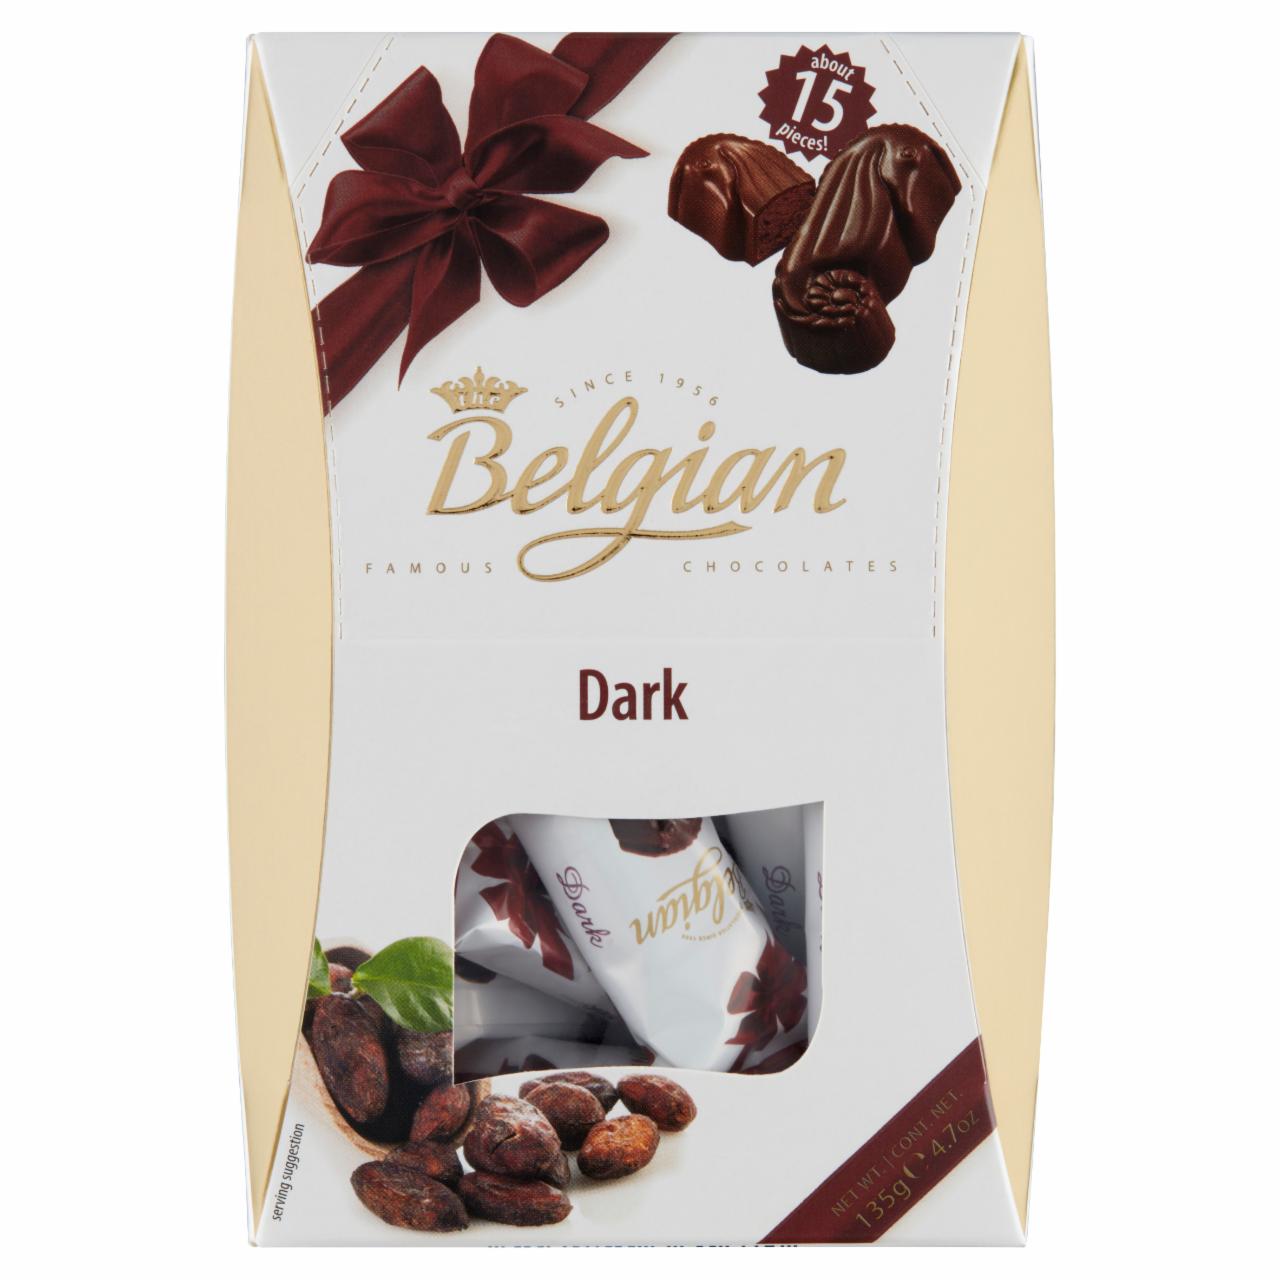 Képek - Belgian Dark belga csokoládé praliné 135 g